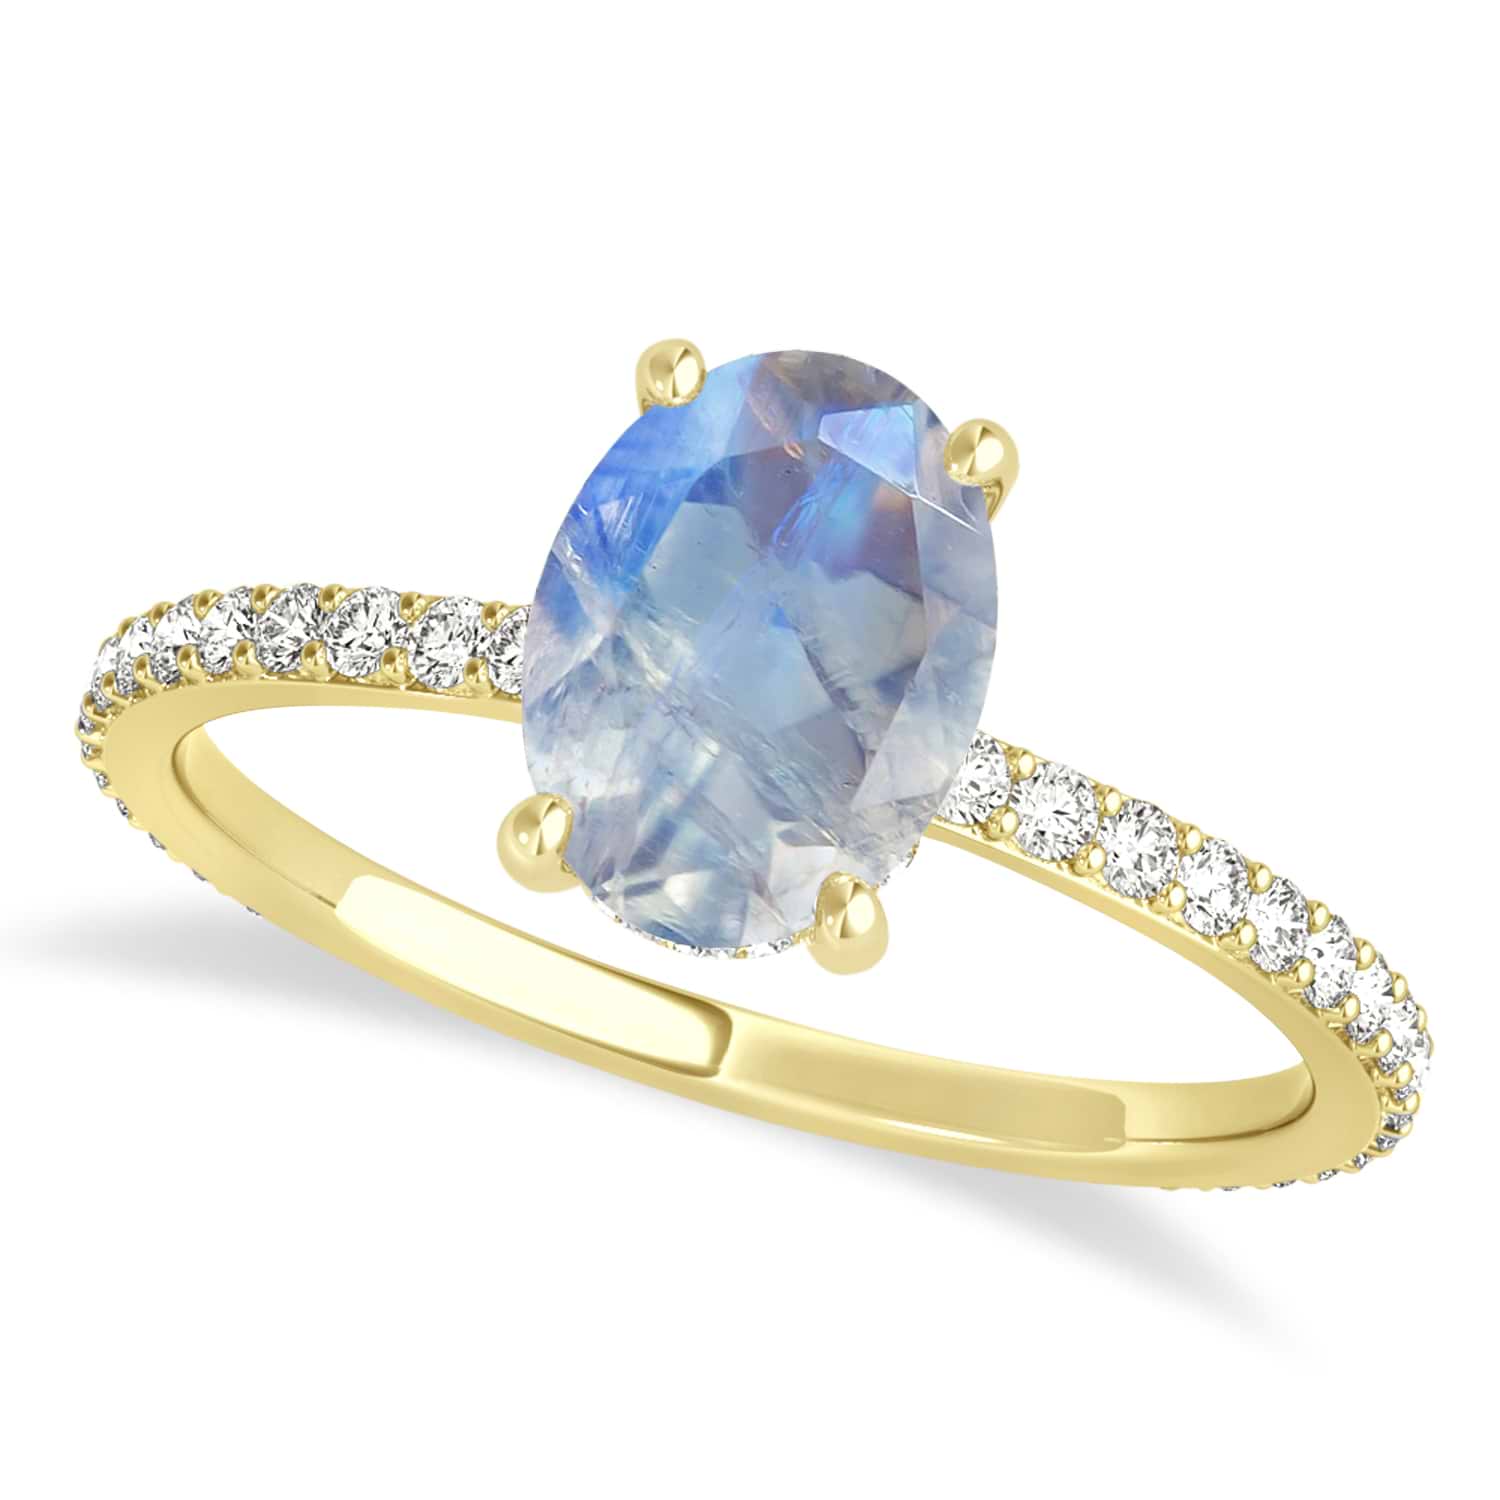 Oval Moonstone & Diamond Hidden Halo Engagement Ring 14k Yellow Gold (0.76ct)